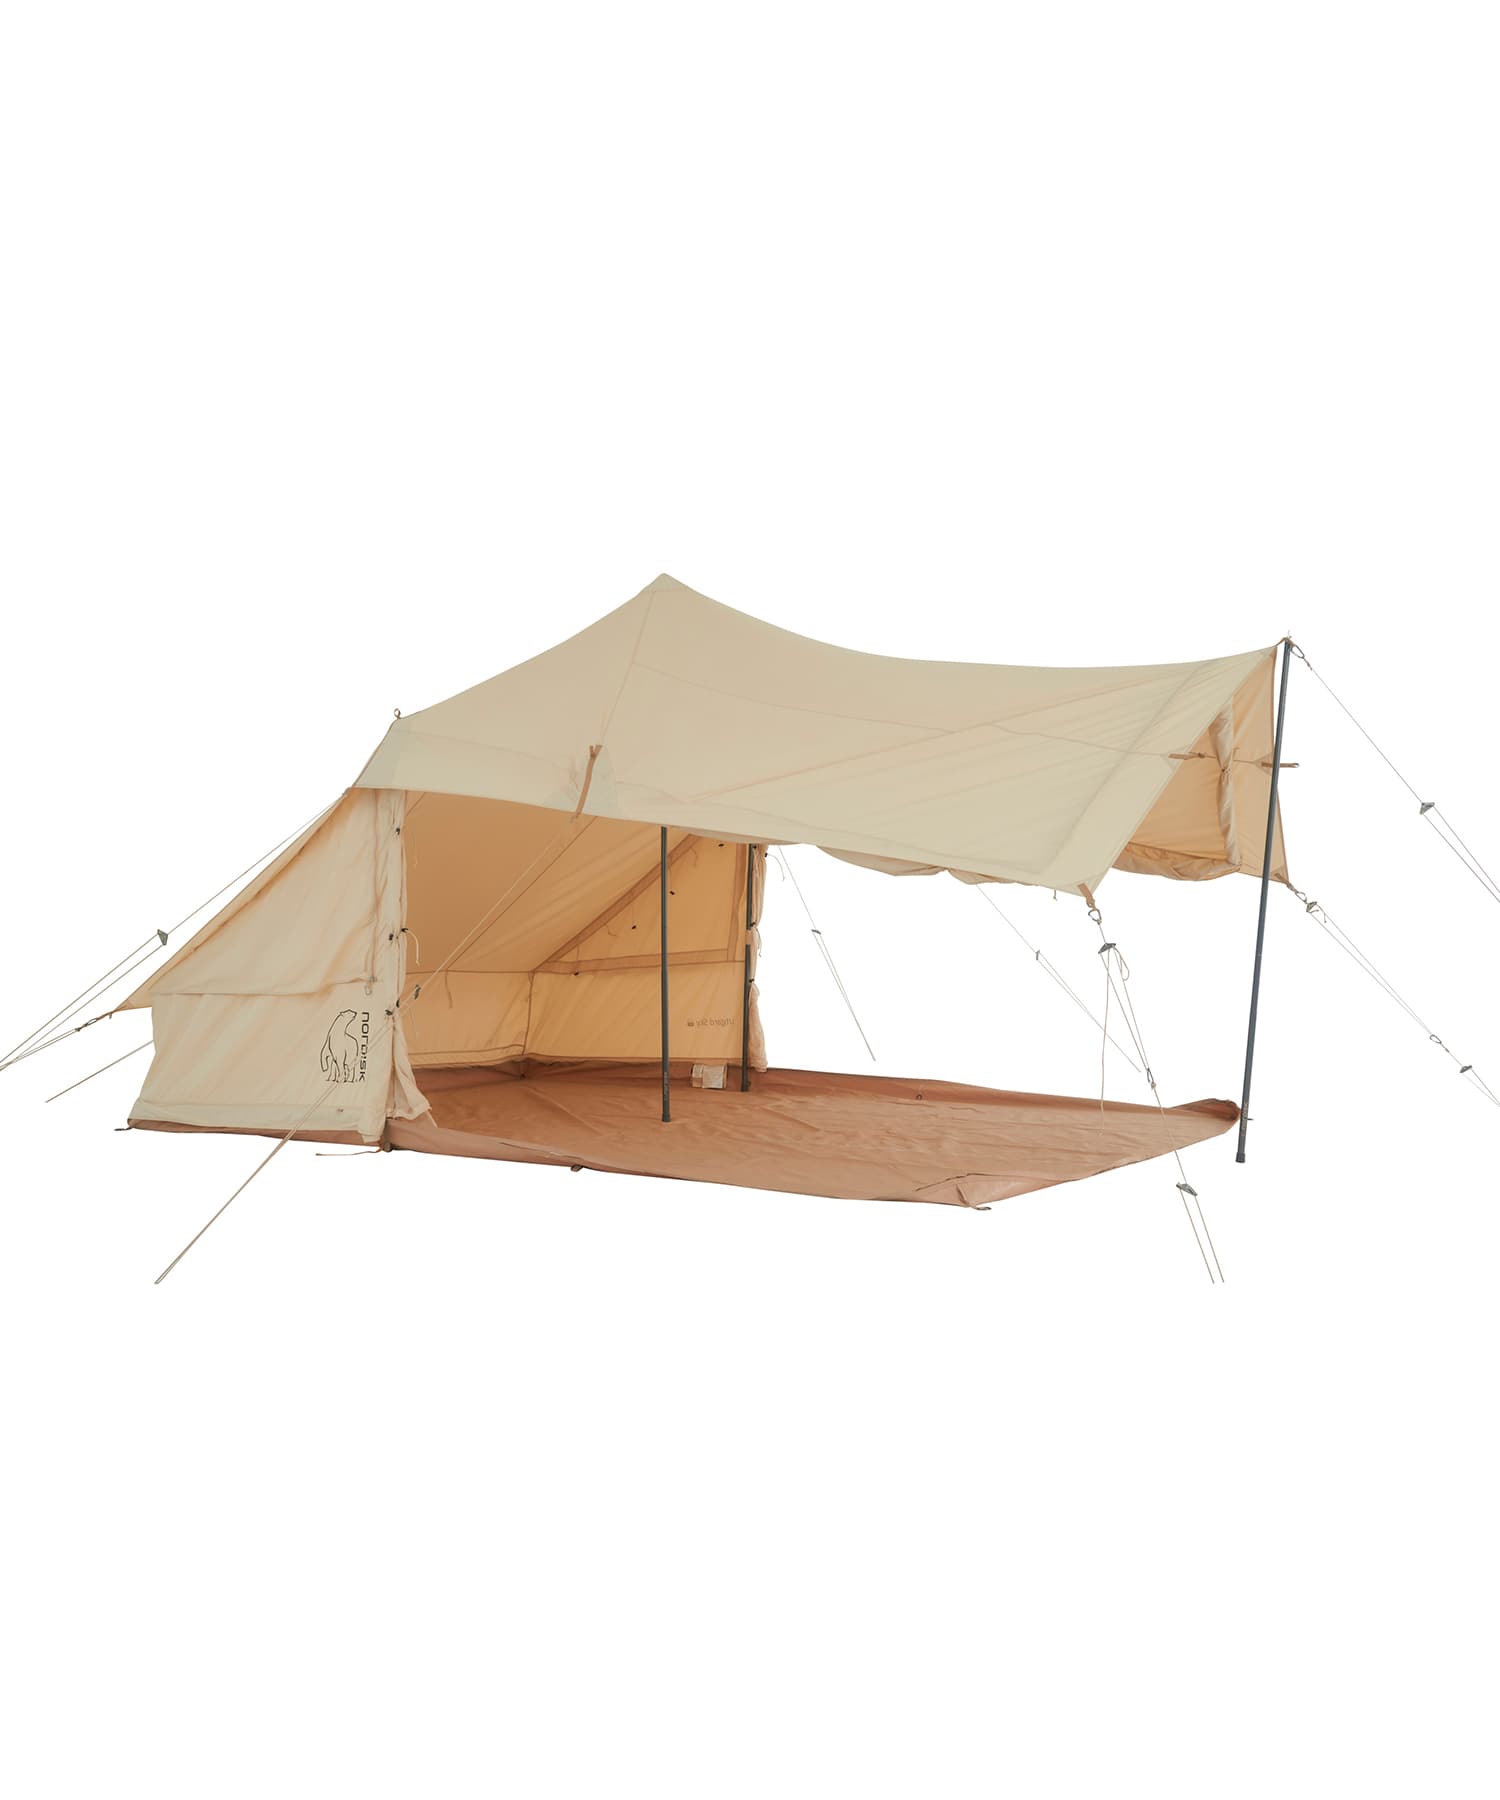 350mmUtgard Sky 13.2 Technical Cotton Tent